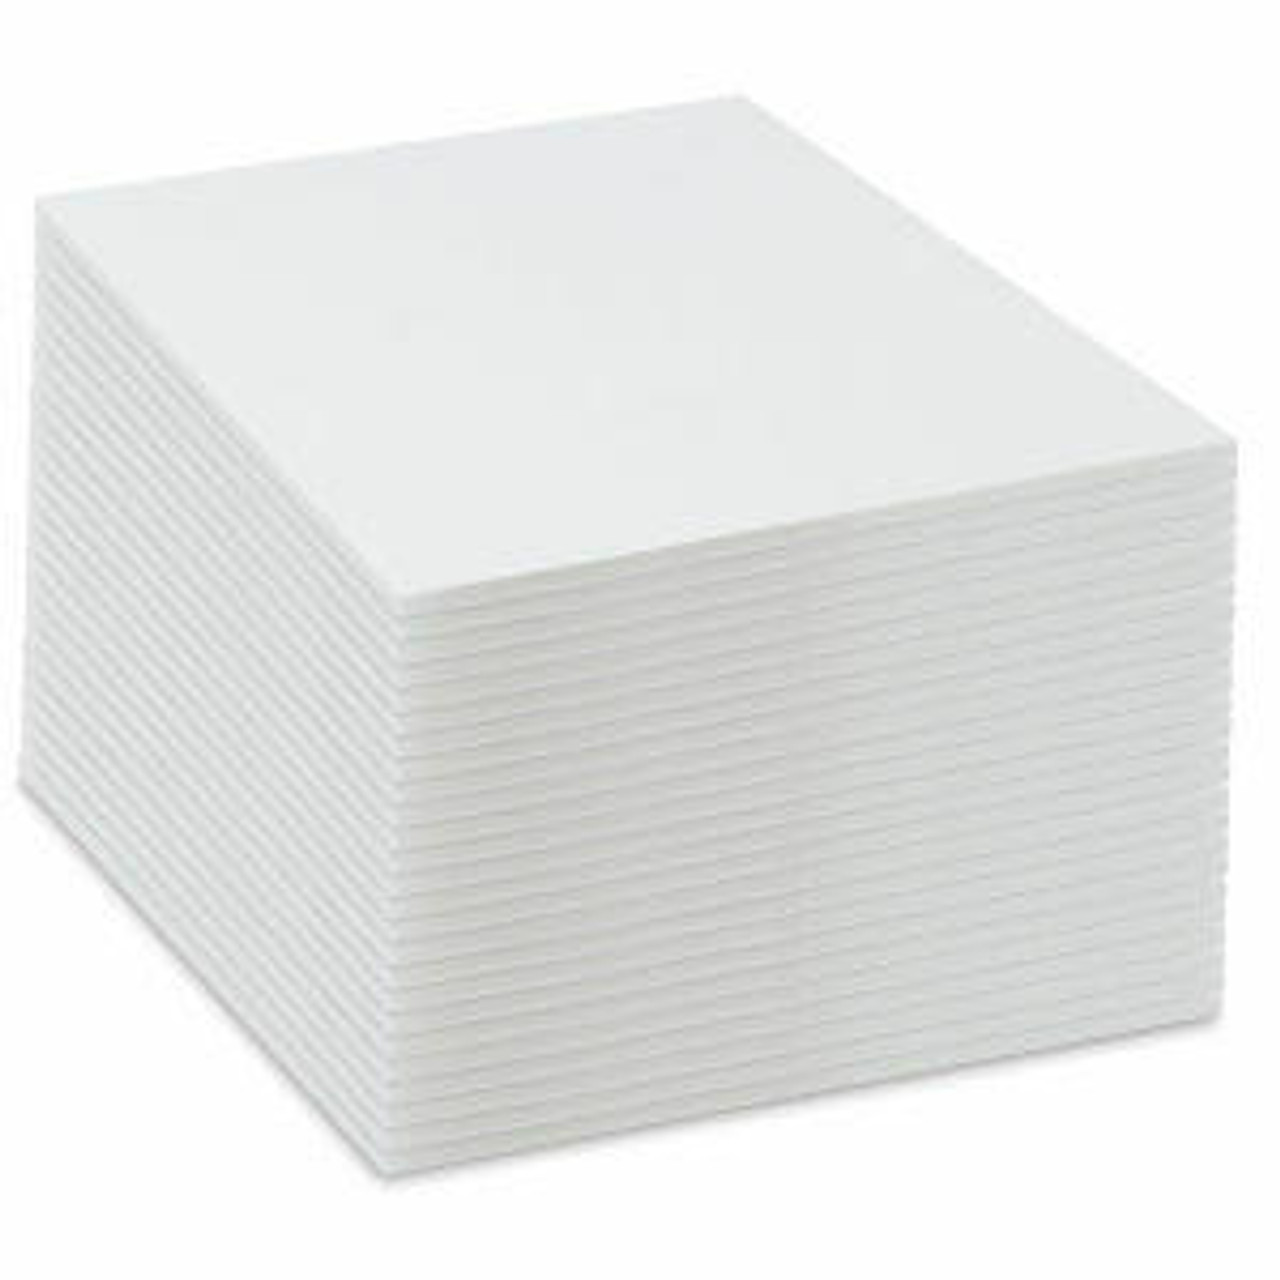 Blick Foamboard Pack - 32 x 40 x 3/16, White, Pkg of 25